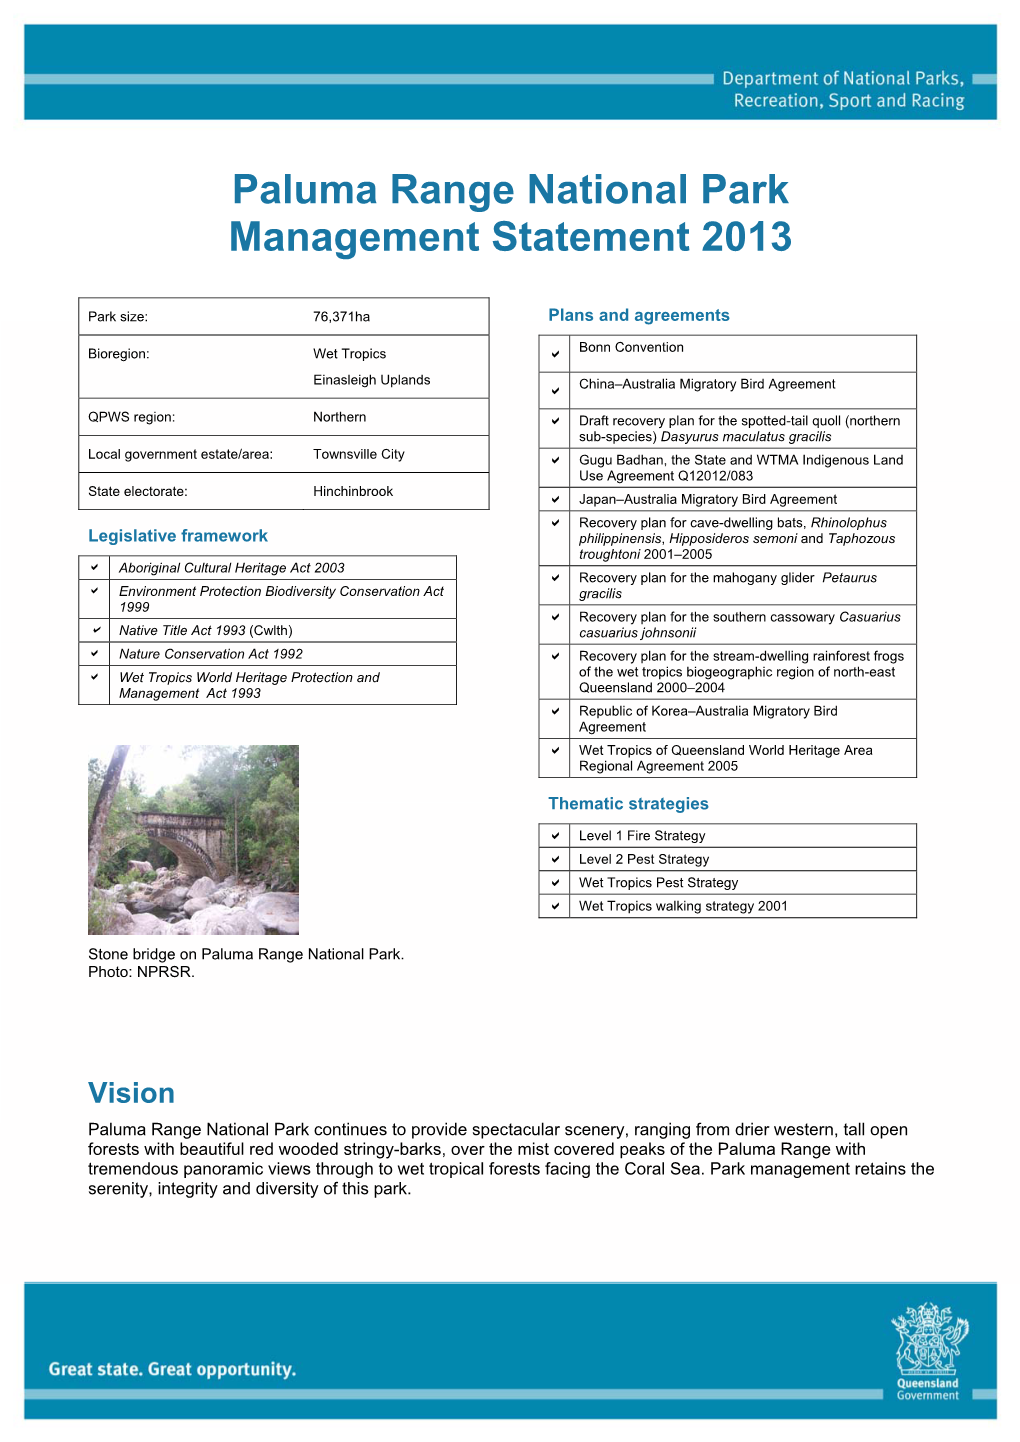 Paluma Range National Park Management Statement 2013